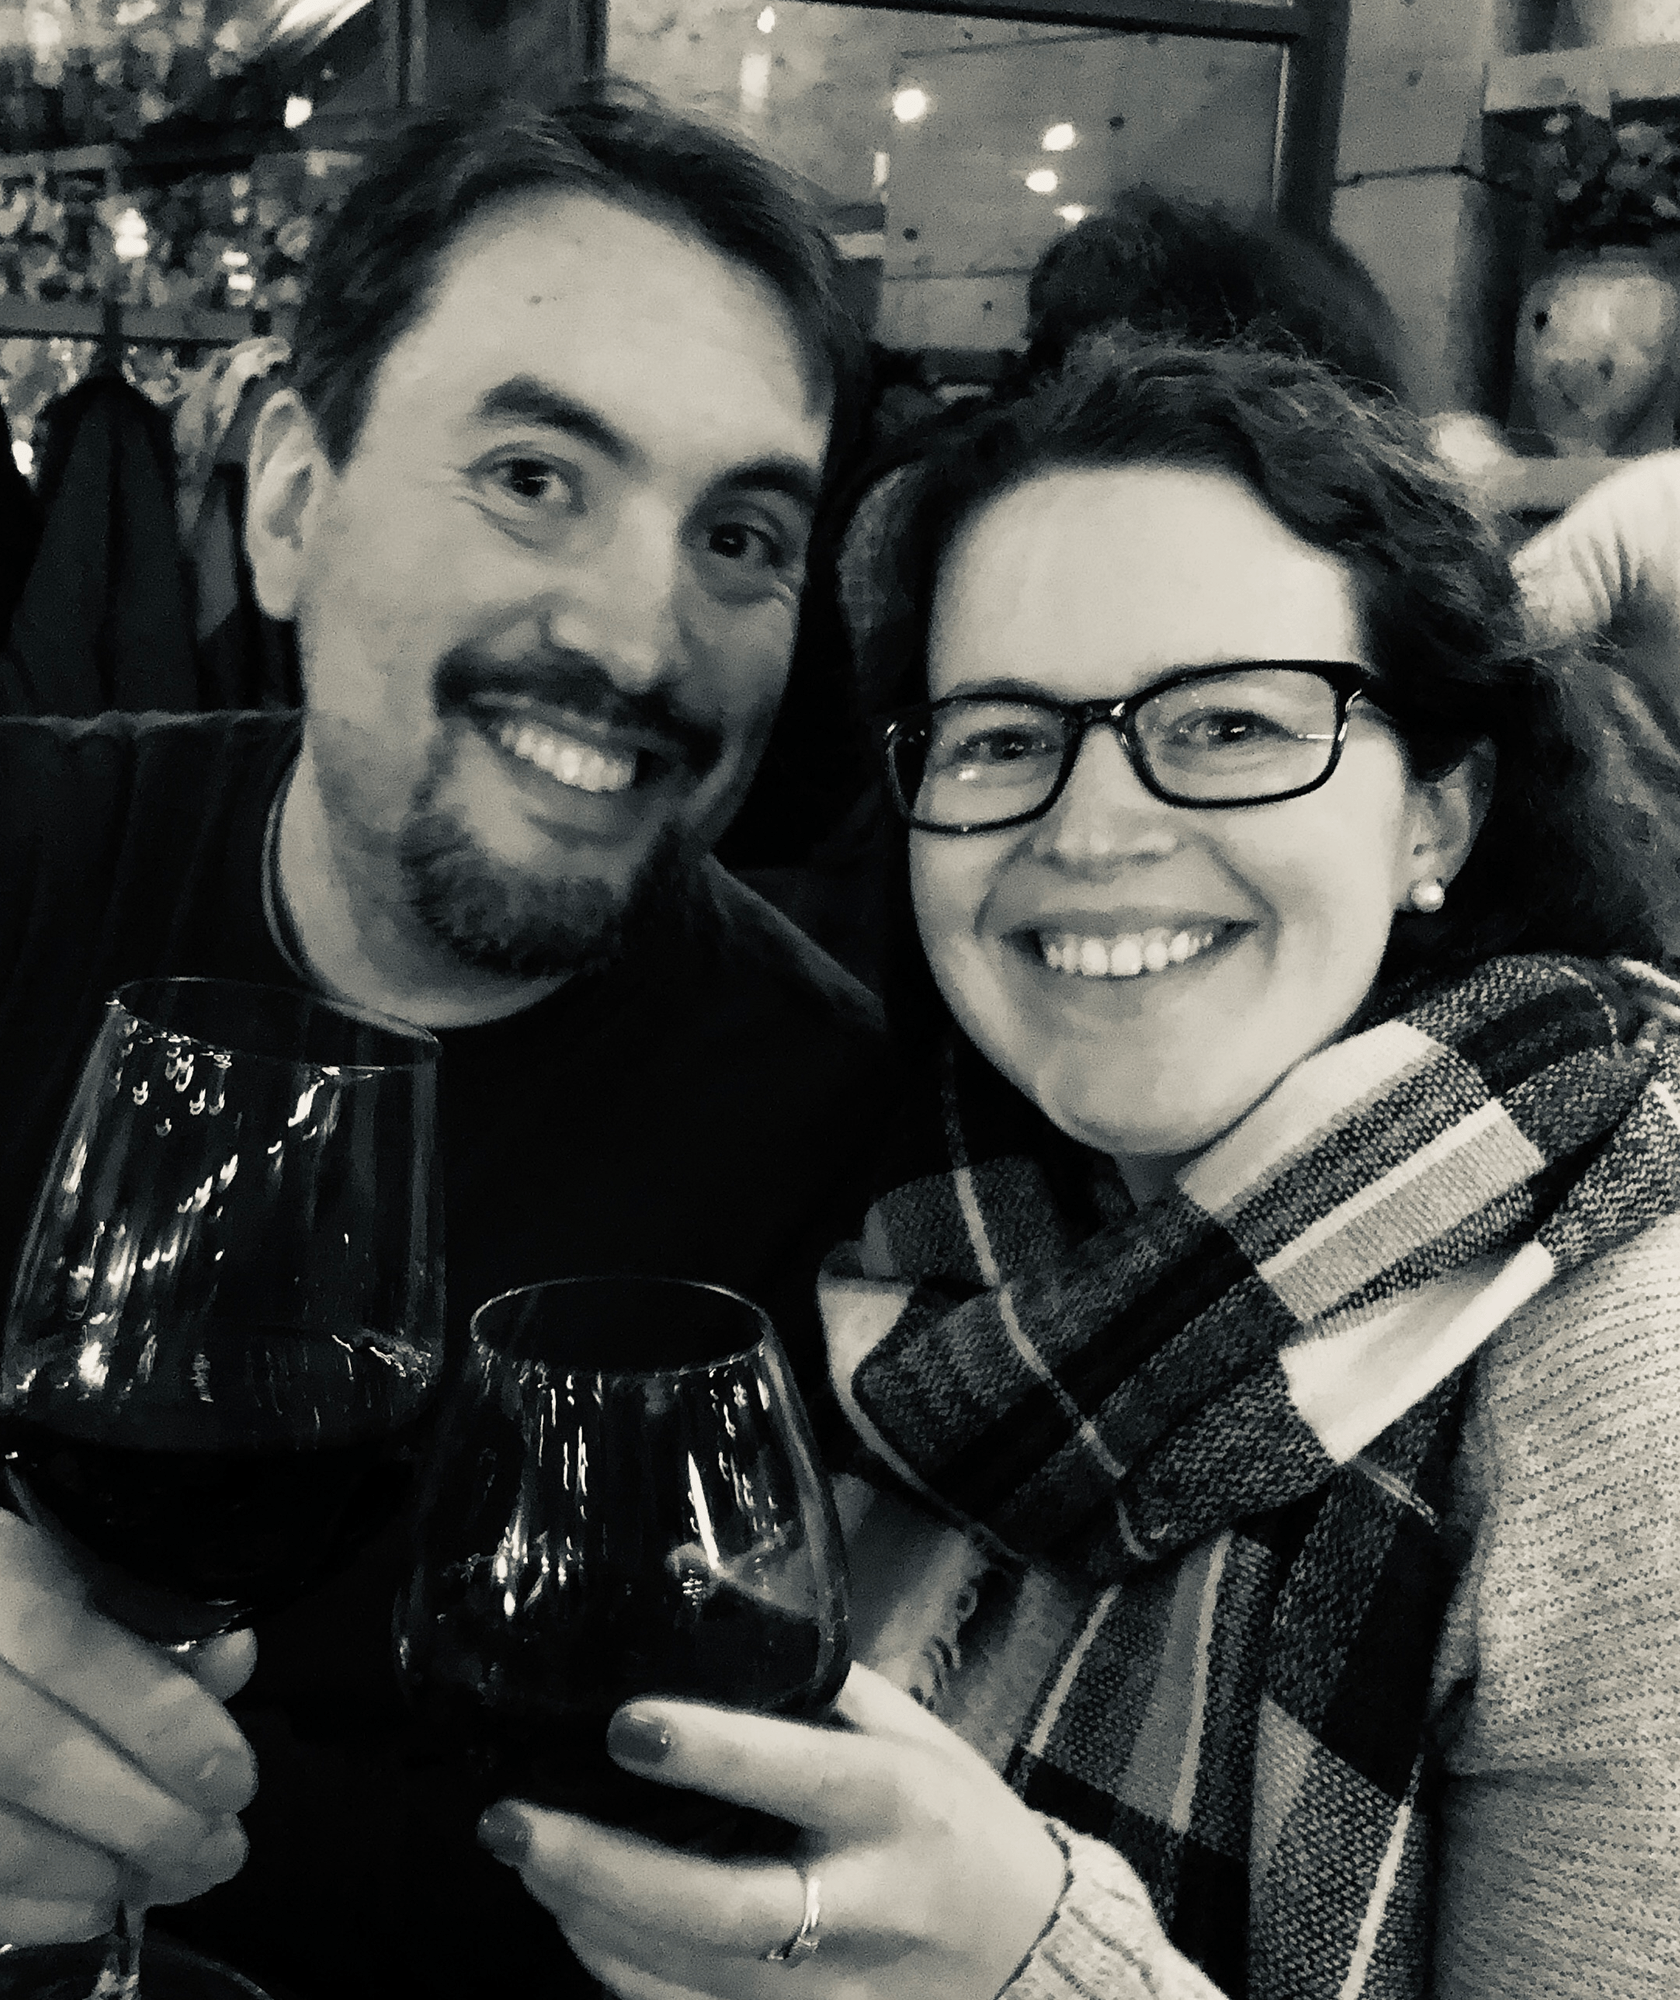 Scott and Becca at a wine bar